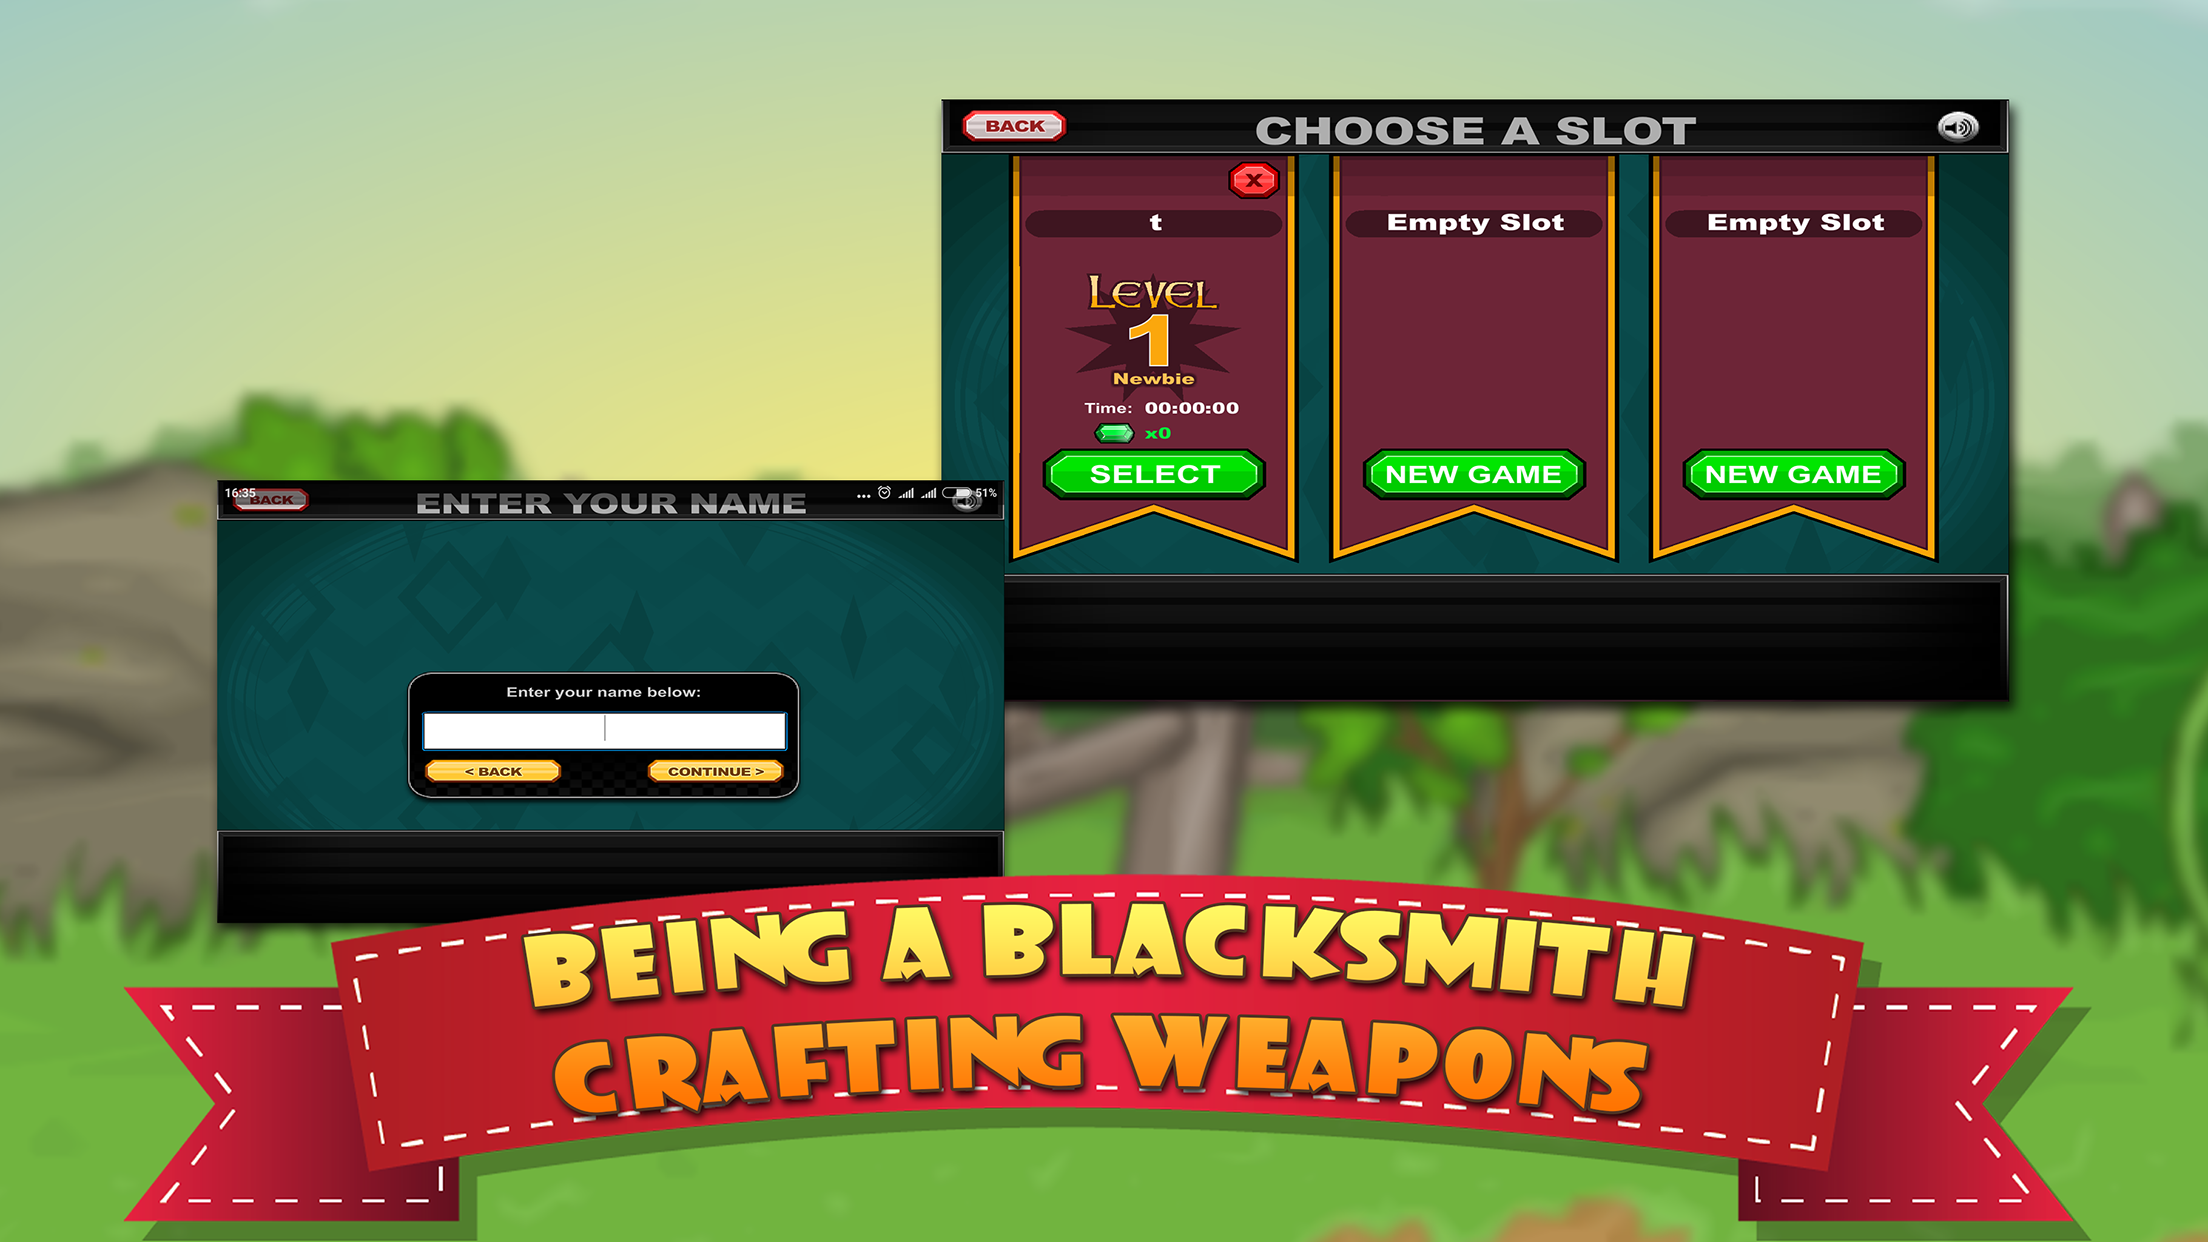 Jacksmith - Fun Blacksmith Craft Game APK for Android Download